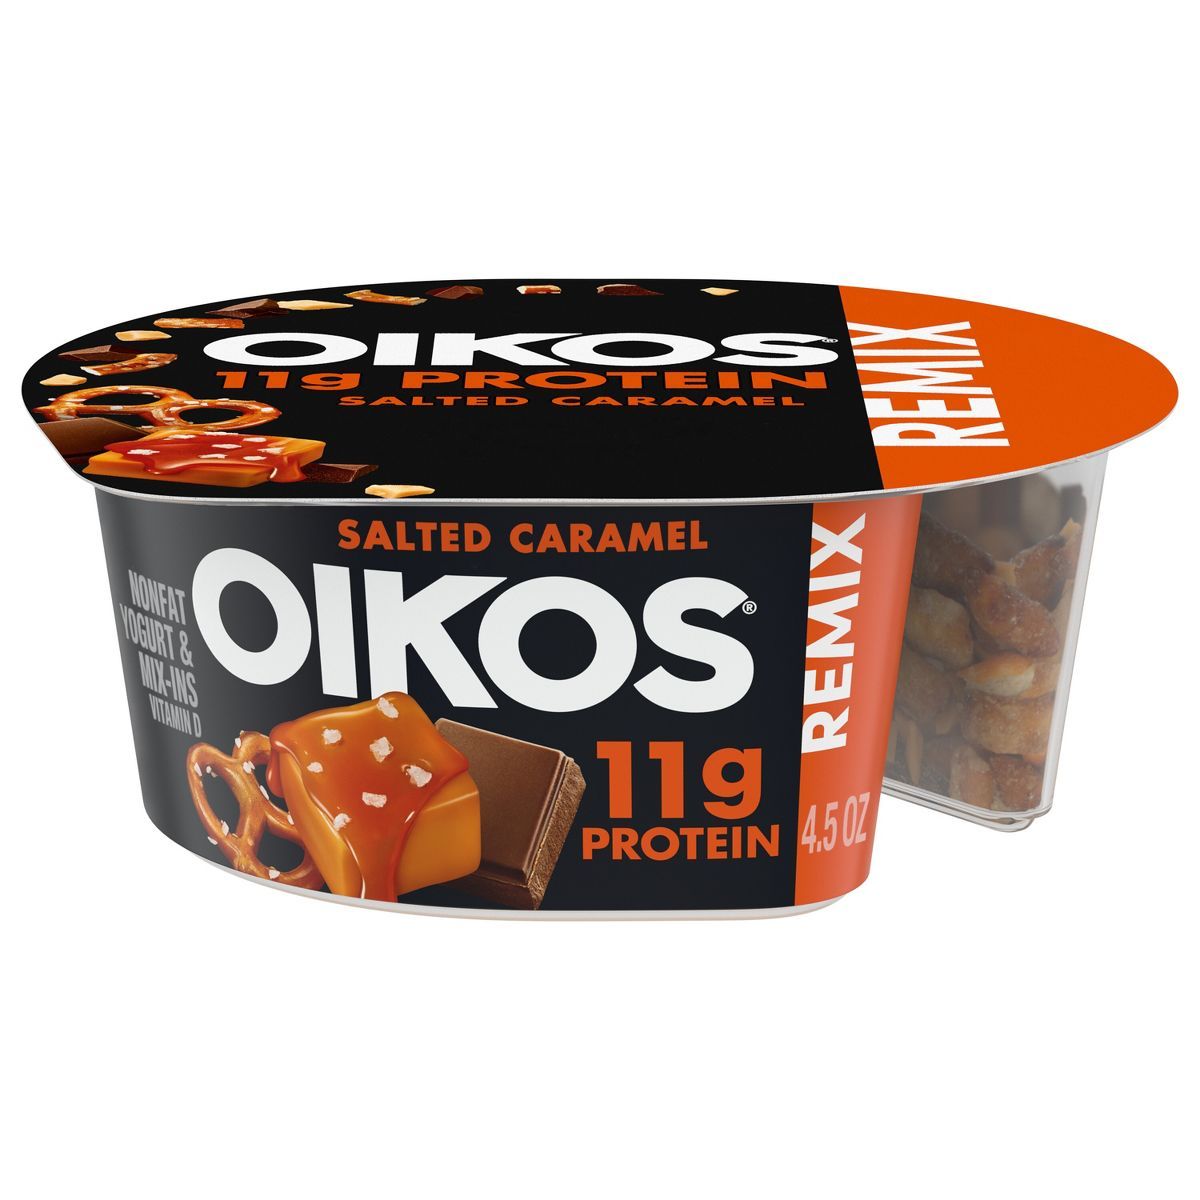 Oikos Mixin Caramel with Chocolate and Pretzel Greek Yogurt - 4.5oz | Target